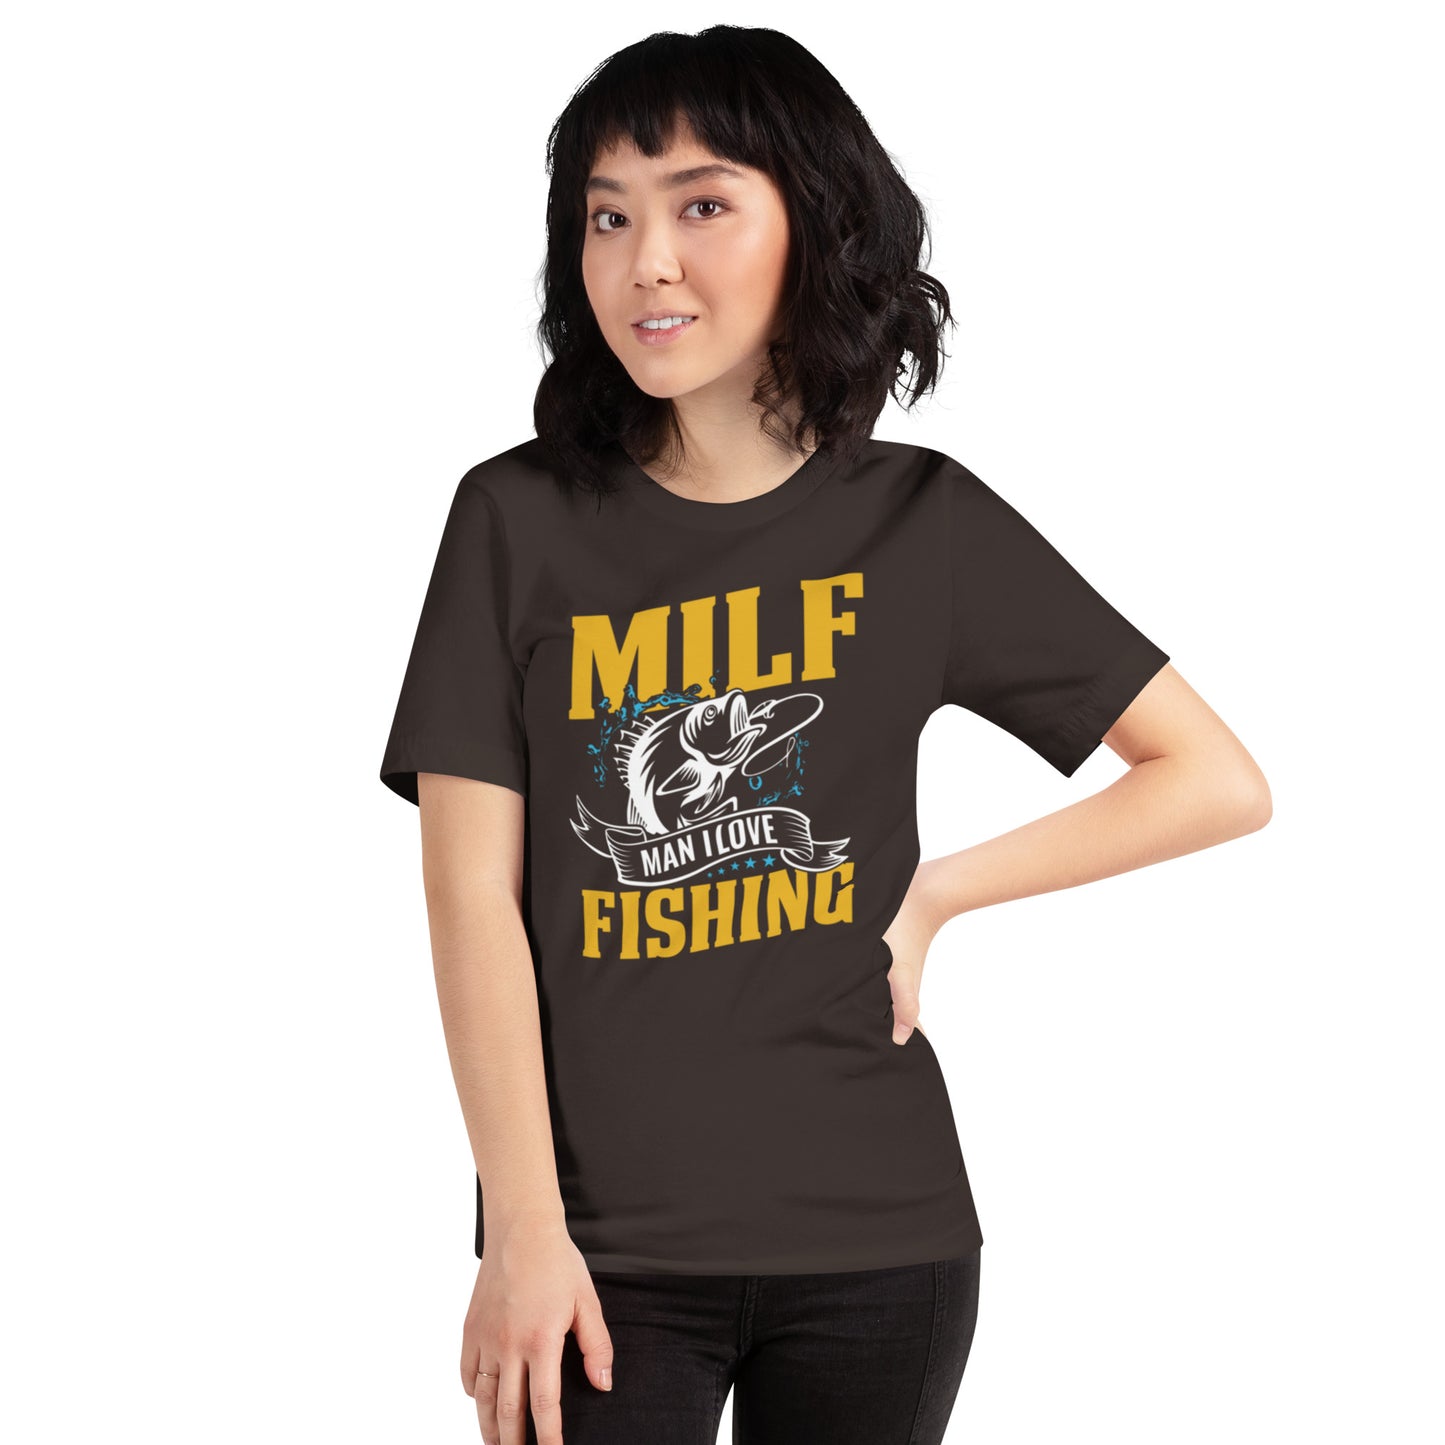 MILF (Man I Love Fishing) Unisex t-shirt